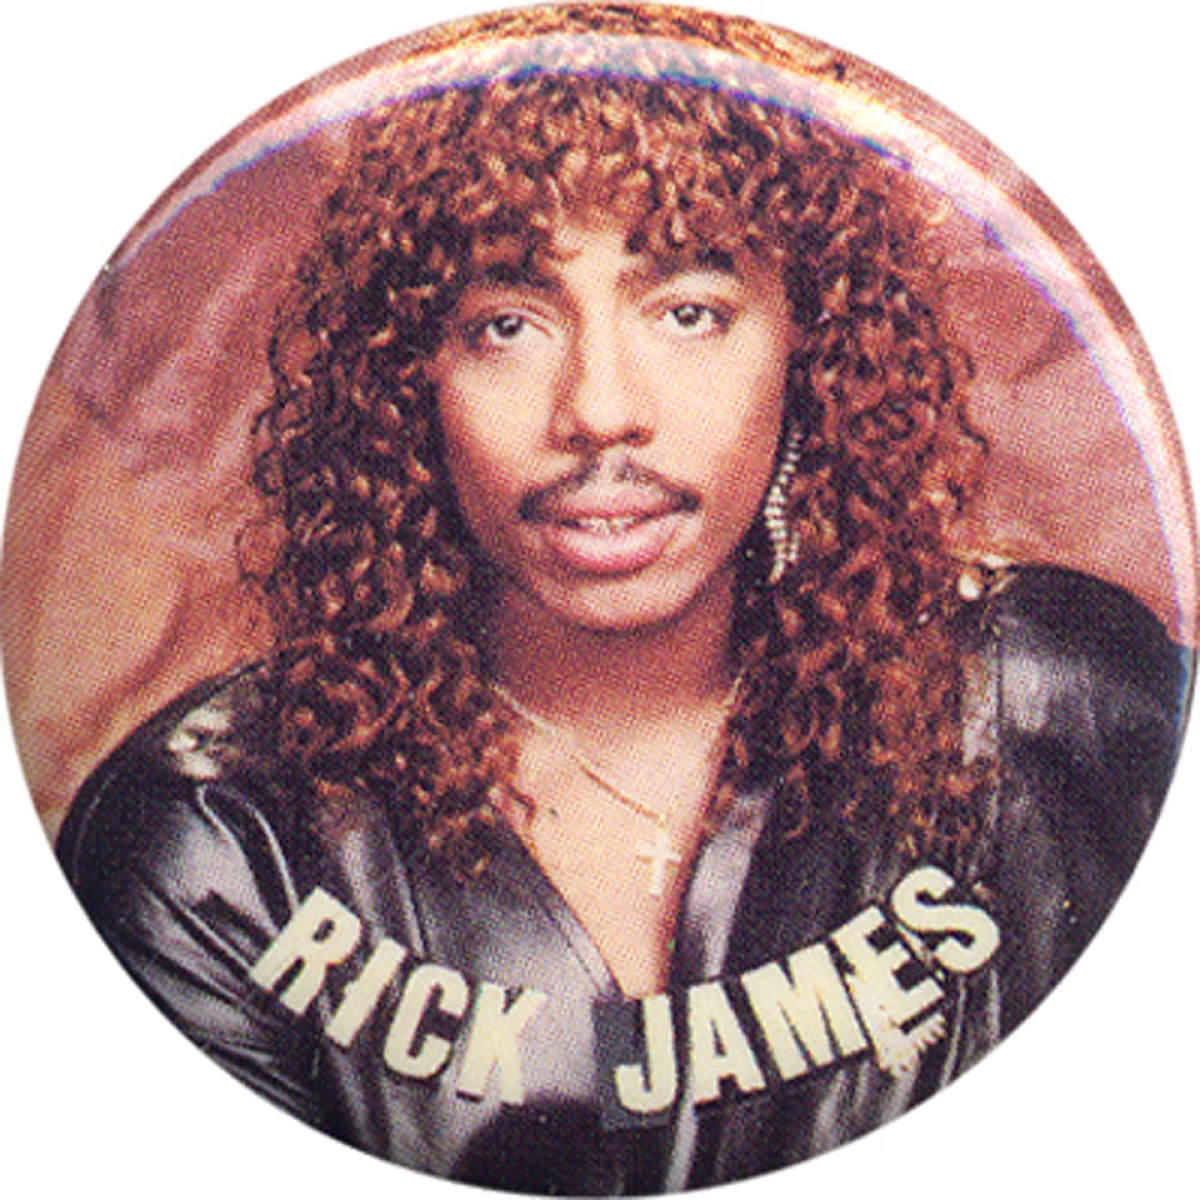 RICK JAMES MUSIC LEGEND 1985 COLLECTIBLE VINTAGE PIN BUTTON RARE MEMORABILIA